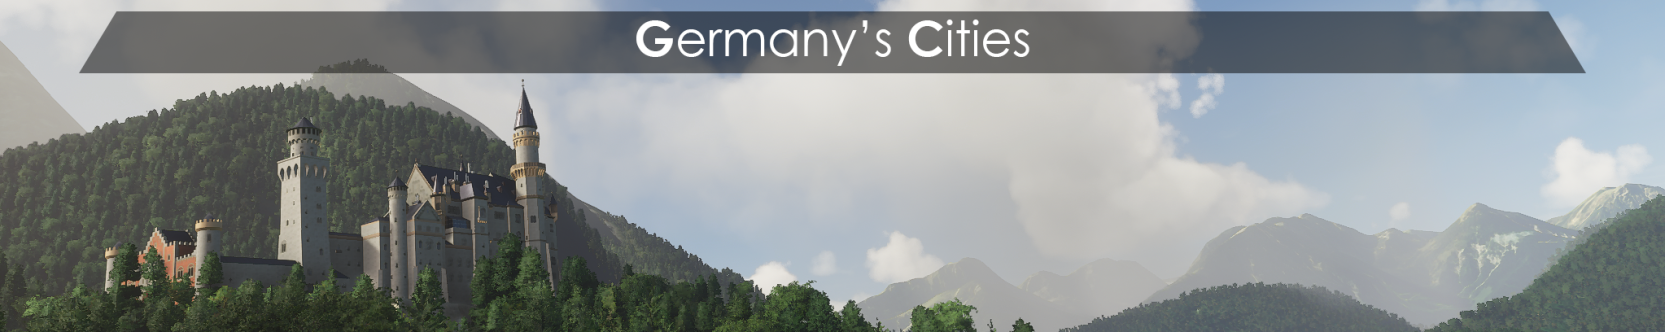 Germany's Cities